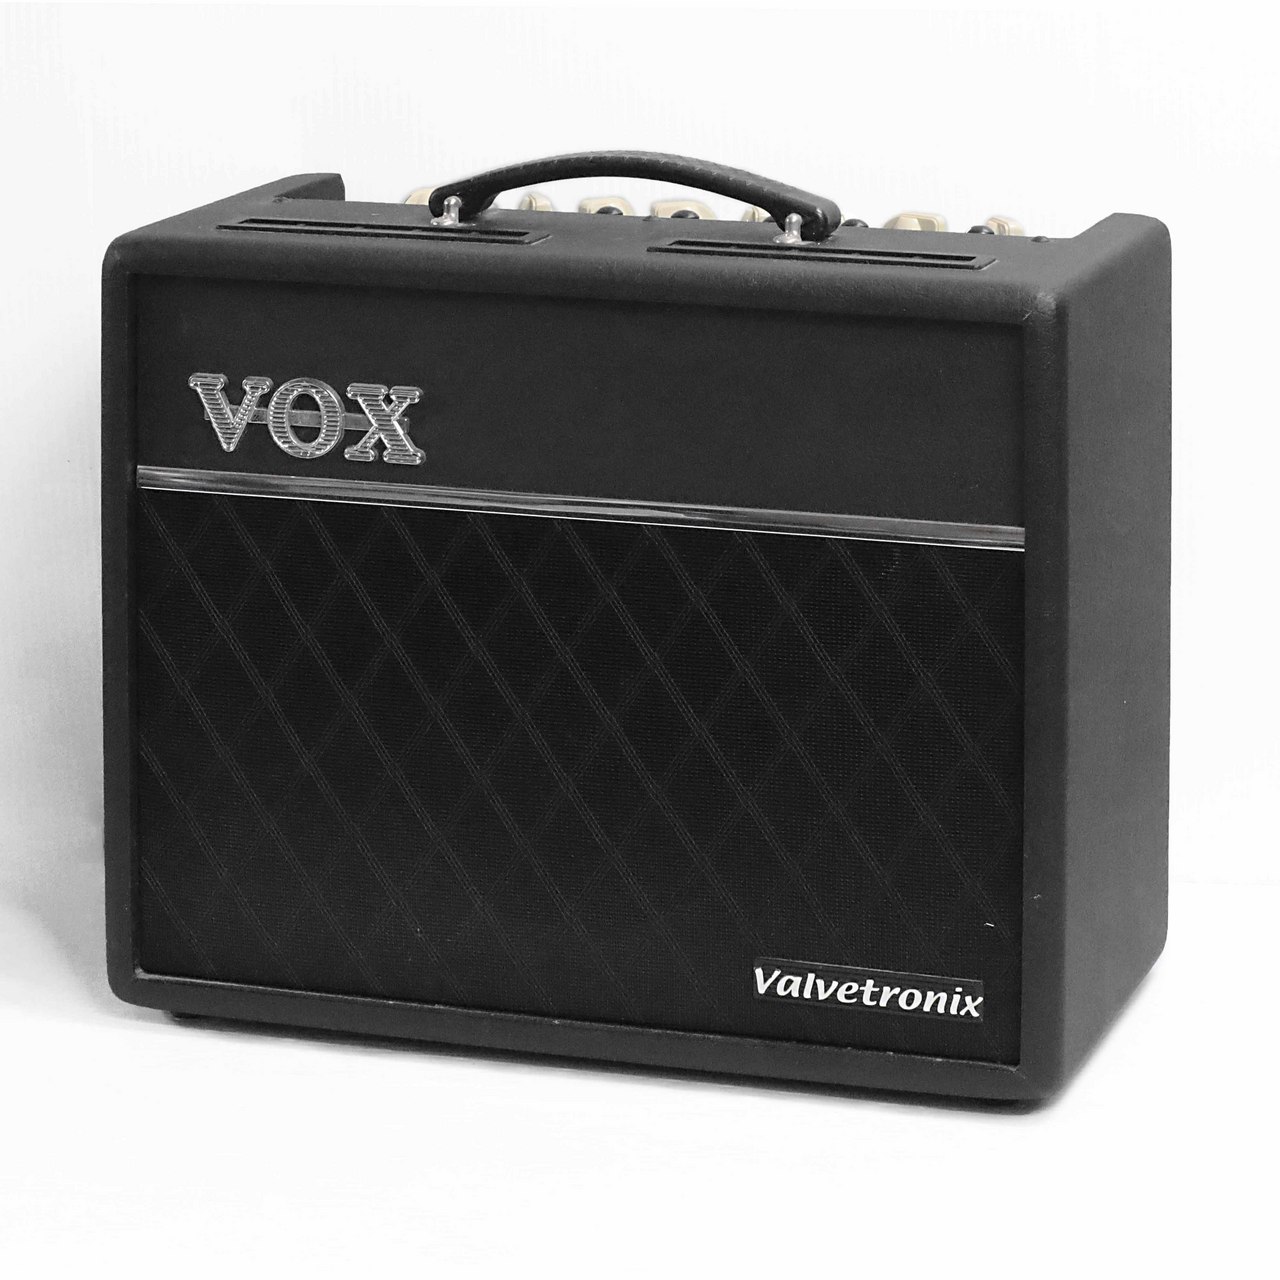 VOX VT20+ Valbetronix ハイブリッド真空管アンプ - アンプ